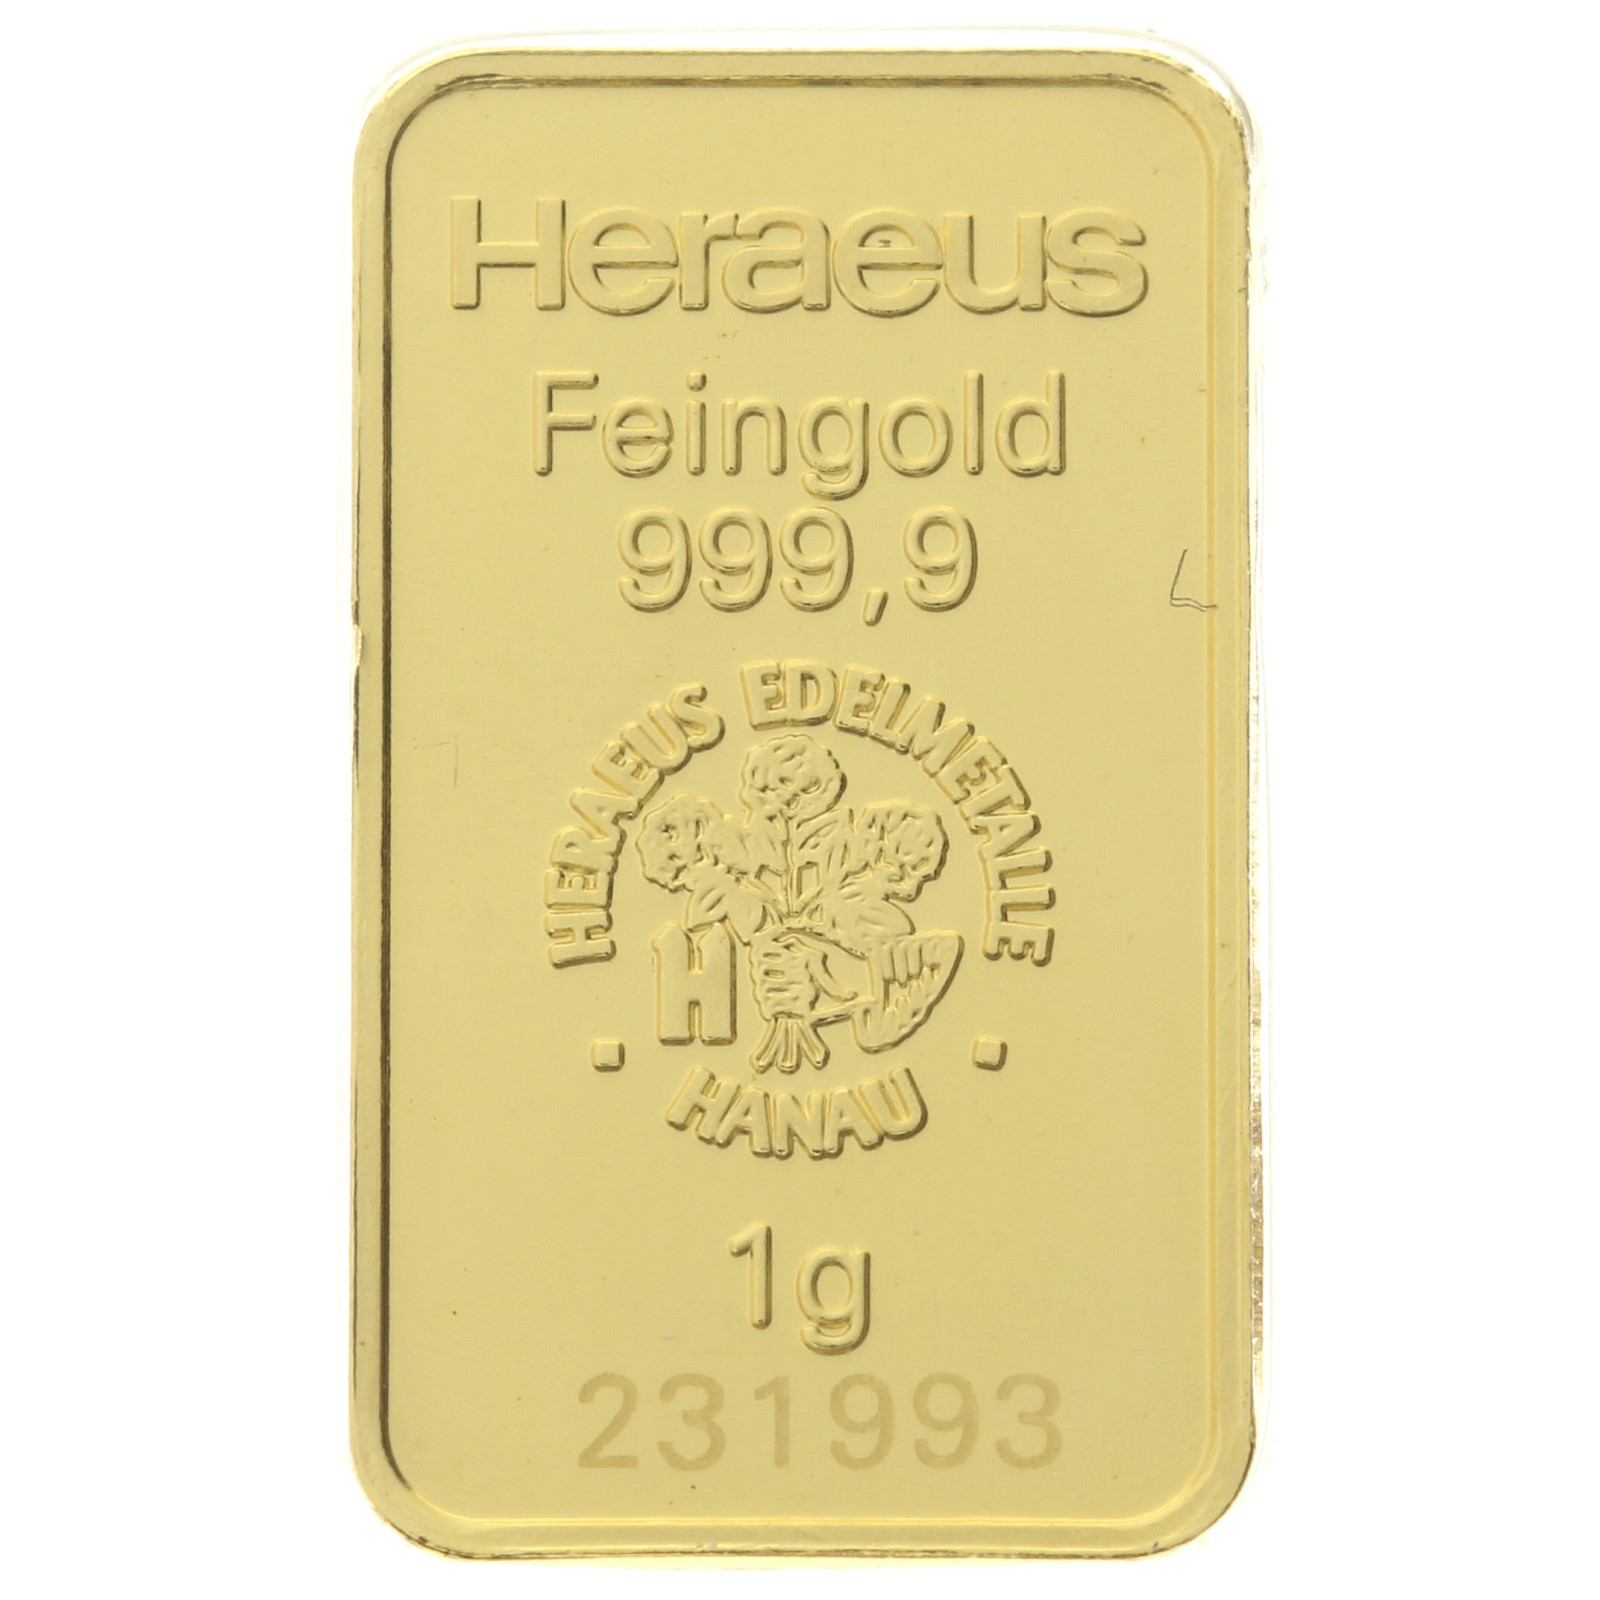 Heraeus - 1 gram fine gold - Bar